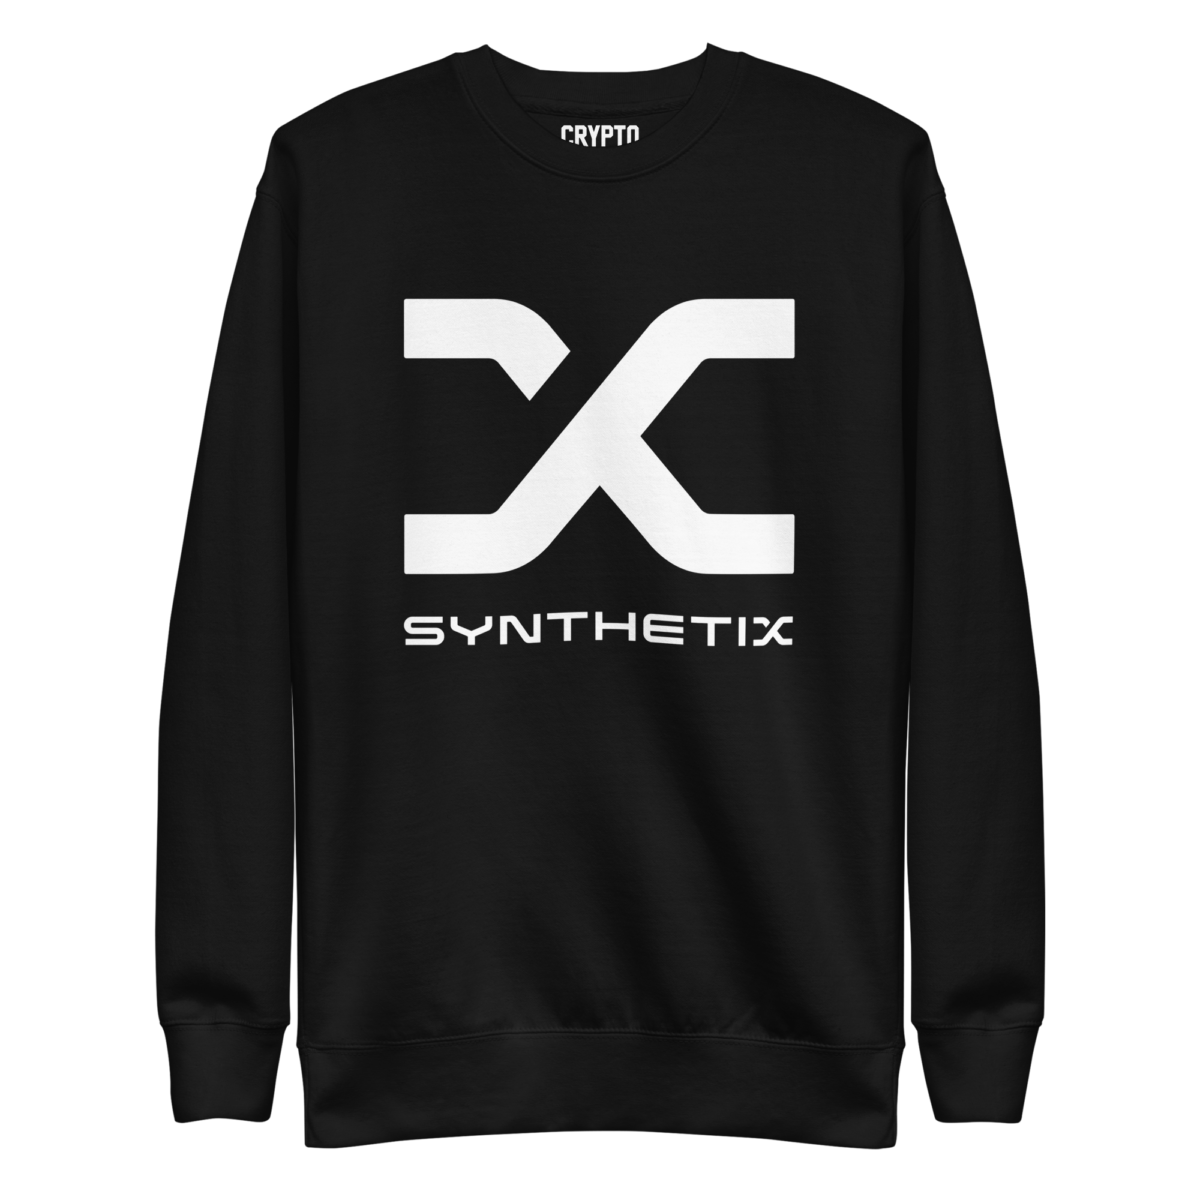 unisex premium sweatshirt black front 631a0d11d9643 - Synthetix SNX Sweatshirt